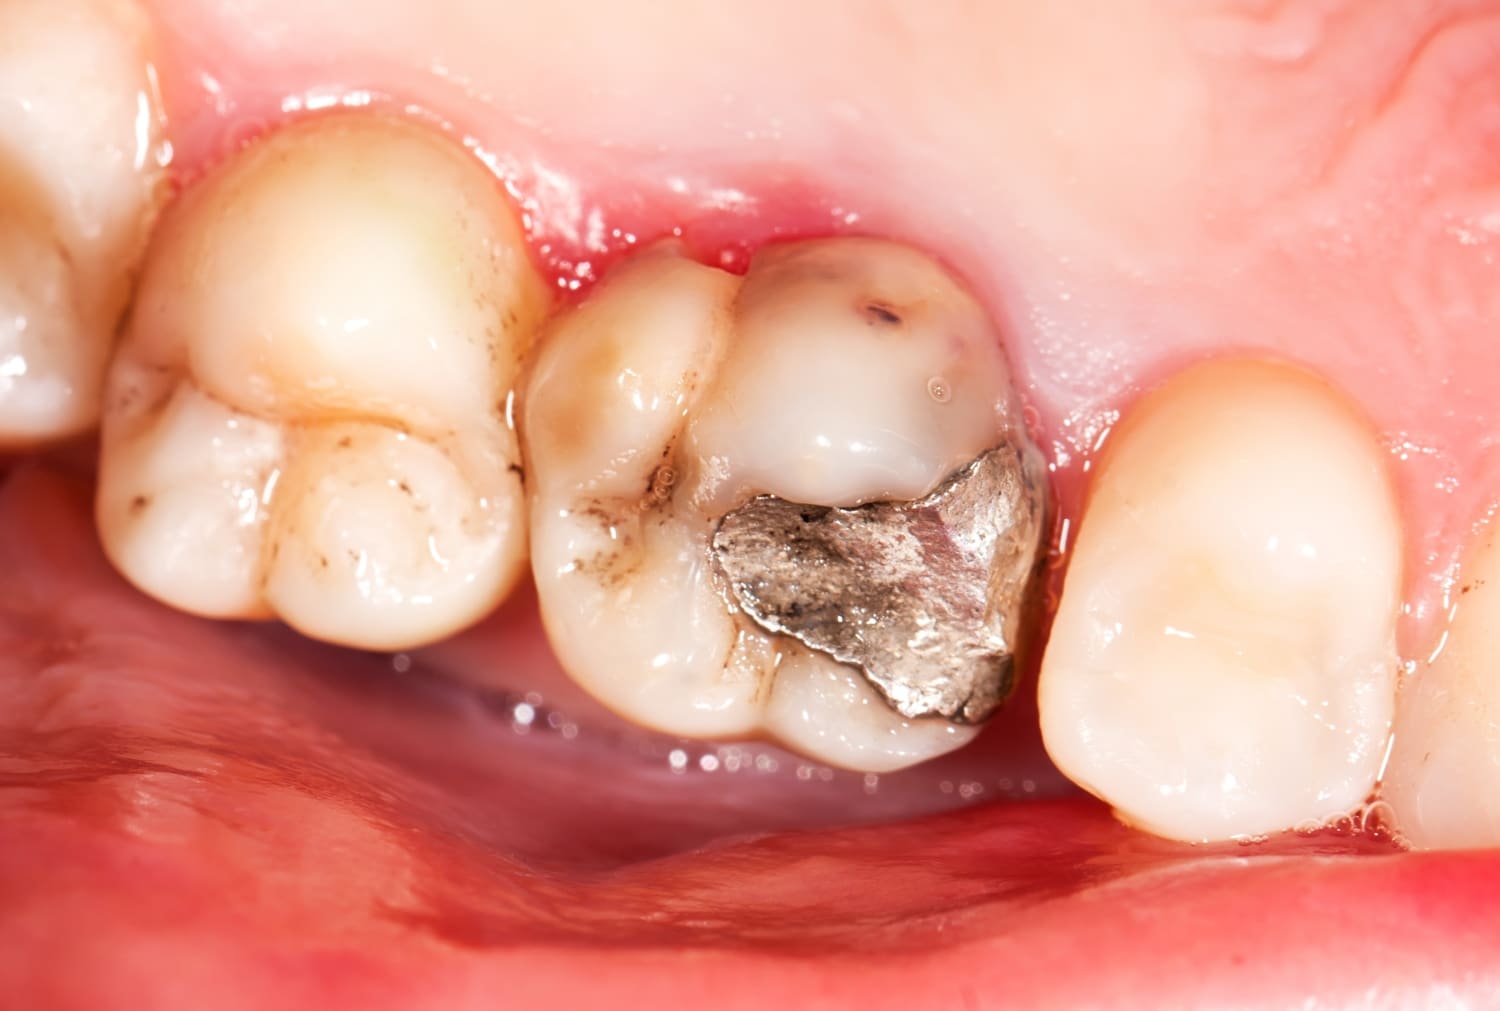 Decay under dental crown